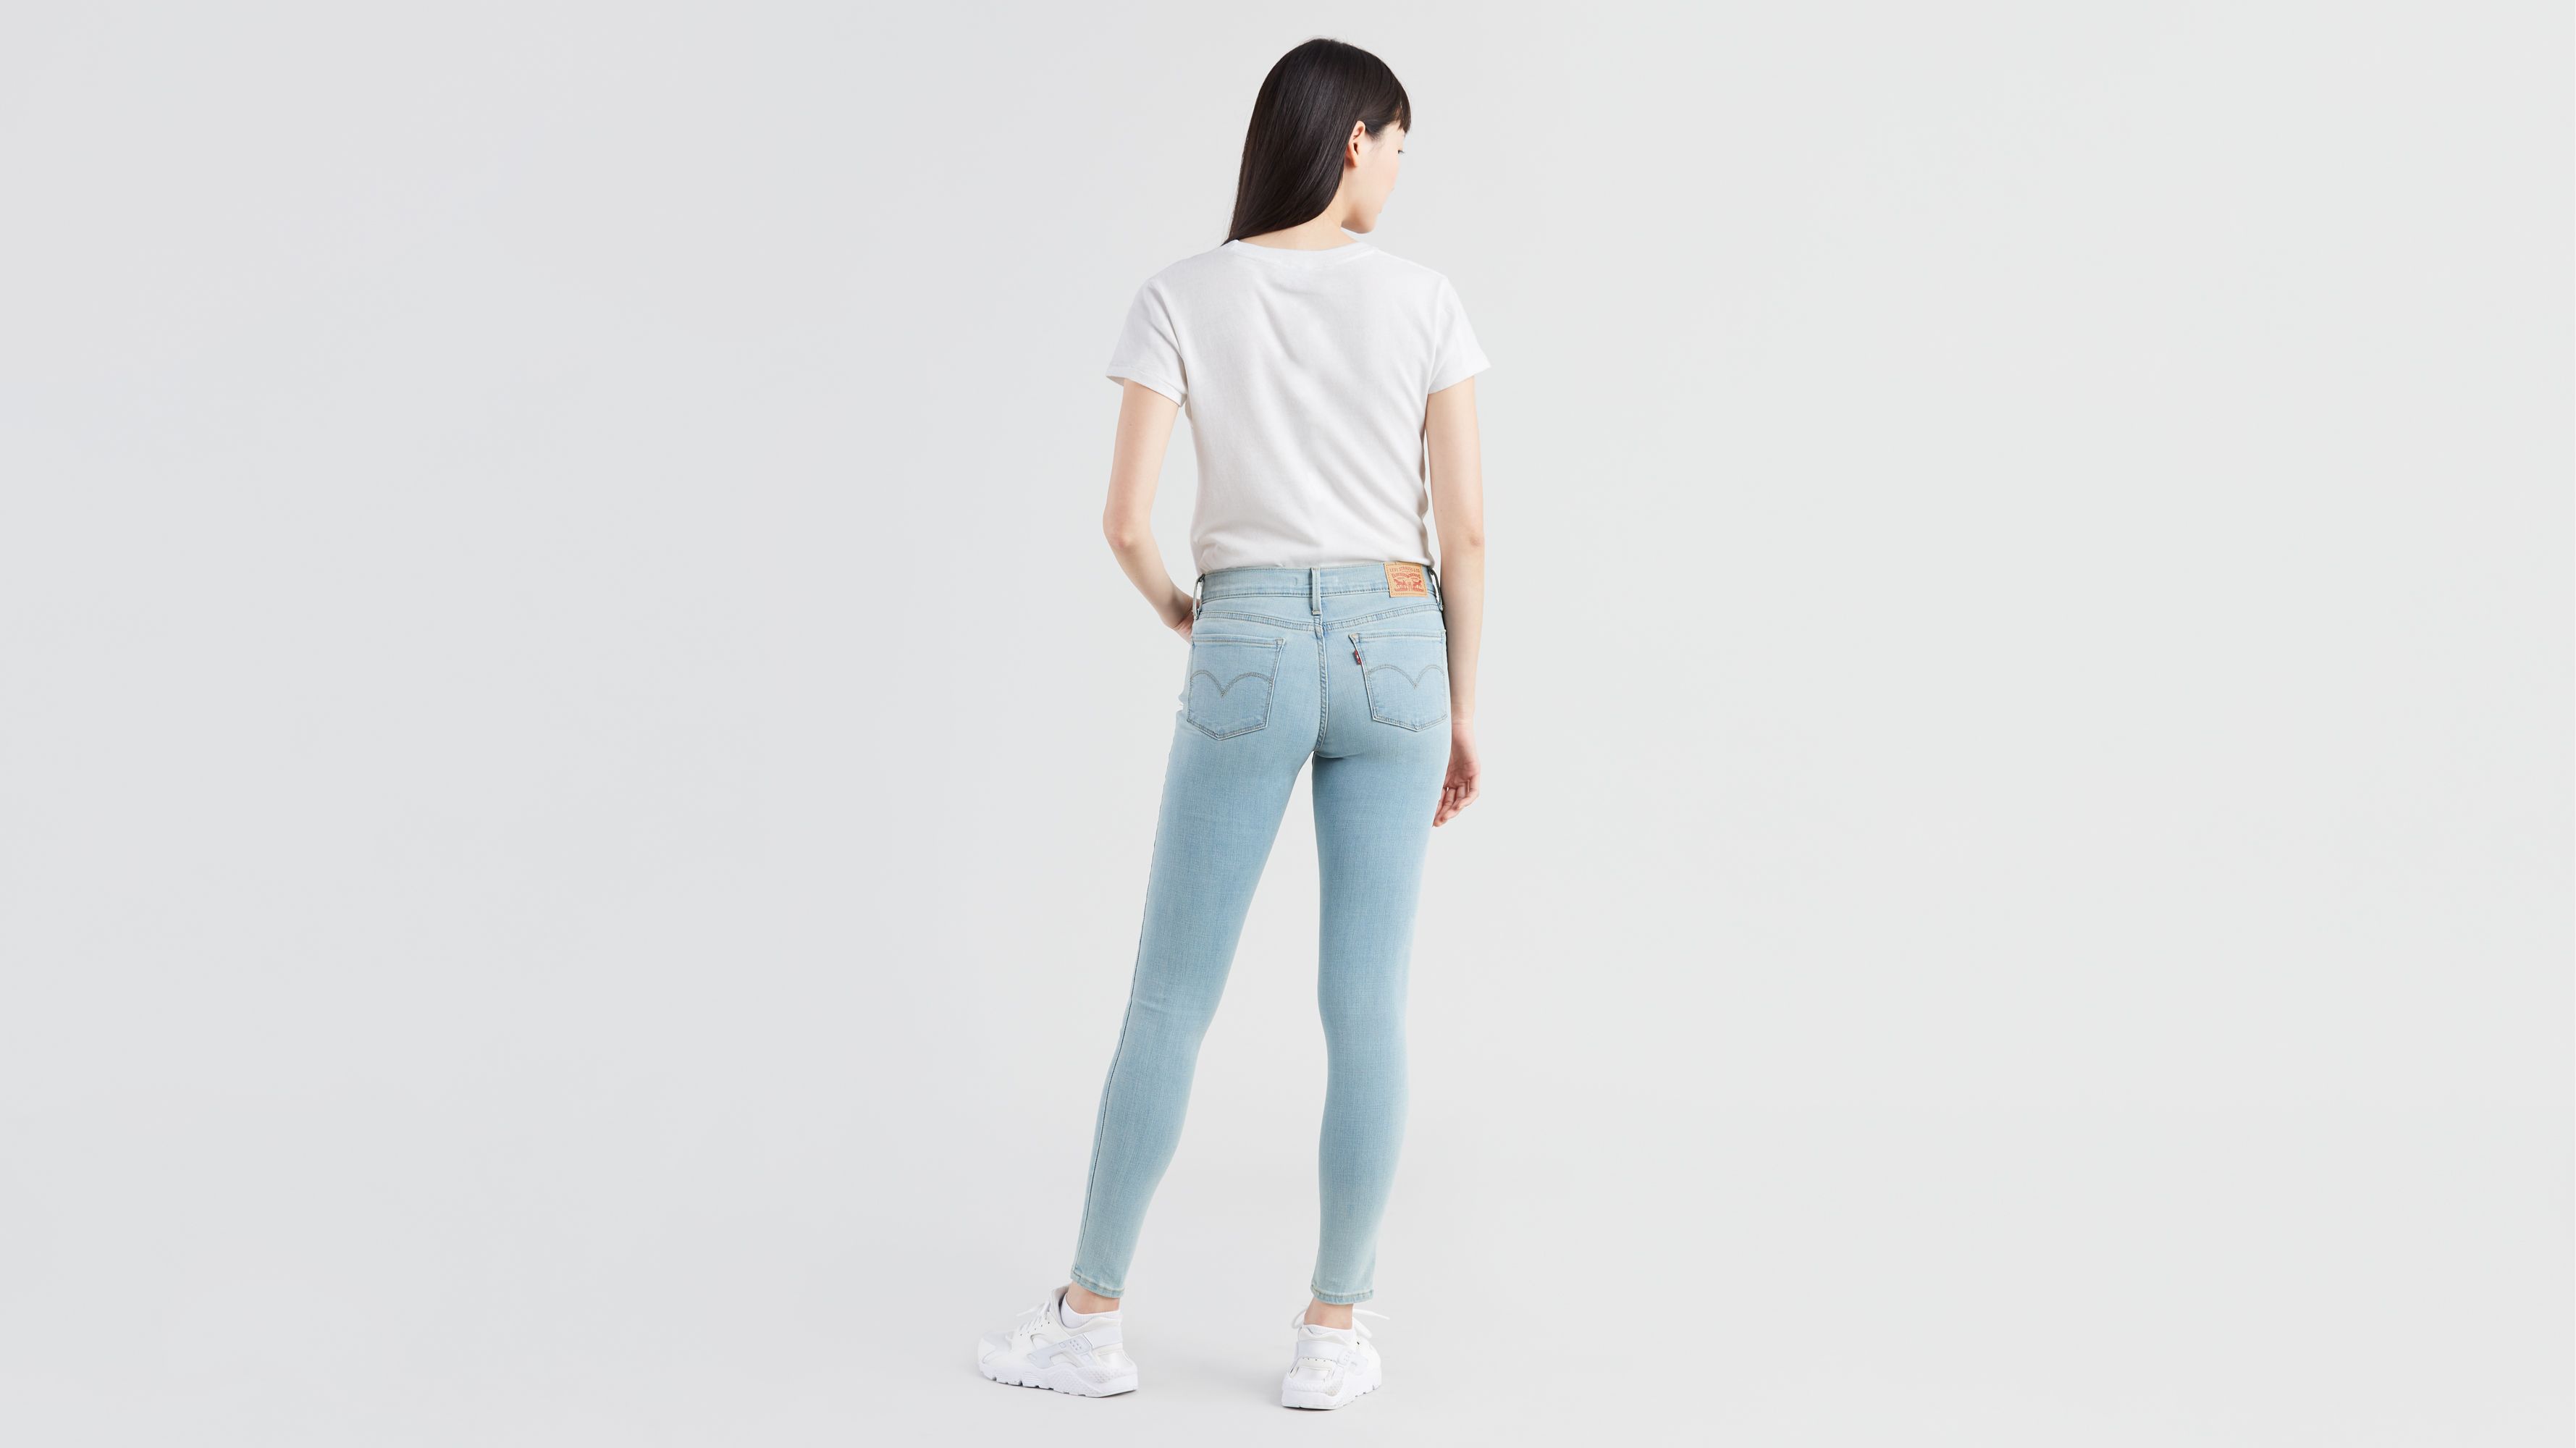 levi's 710 womens jeans